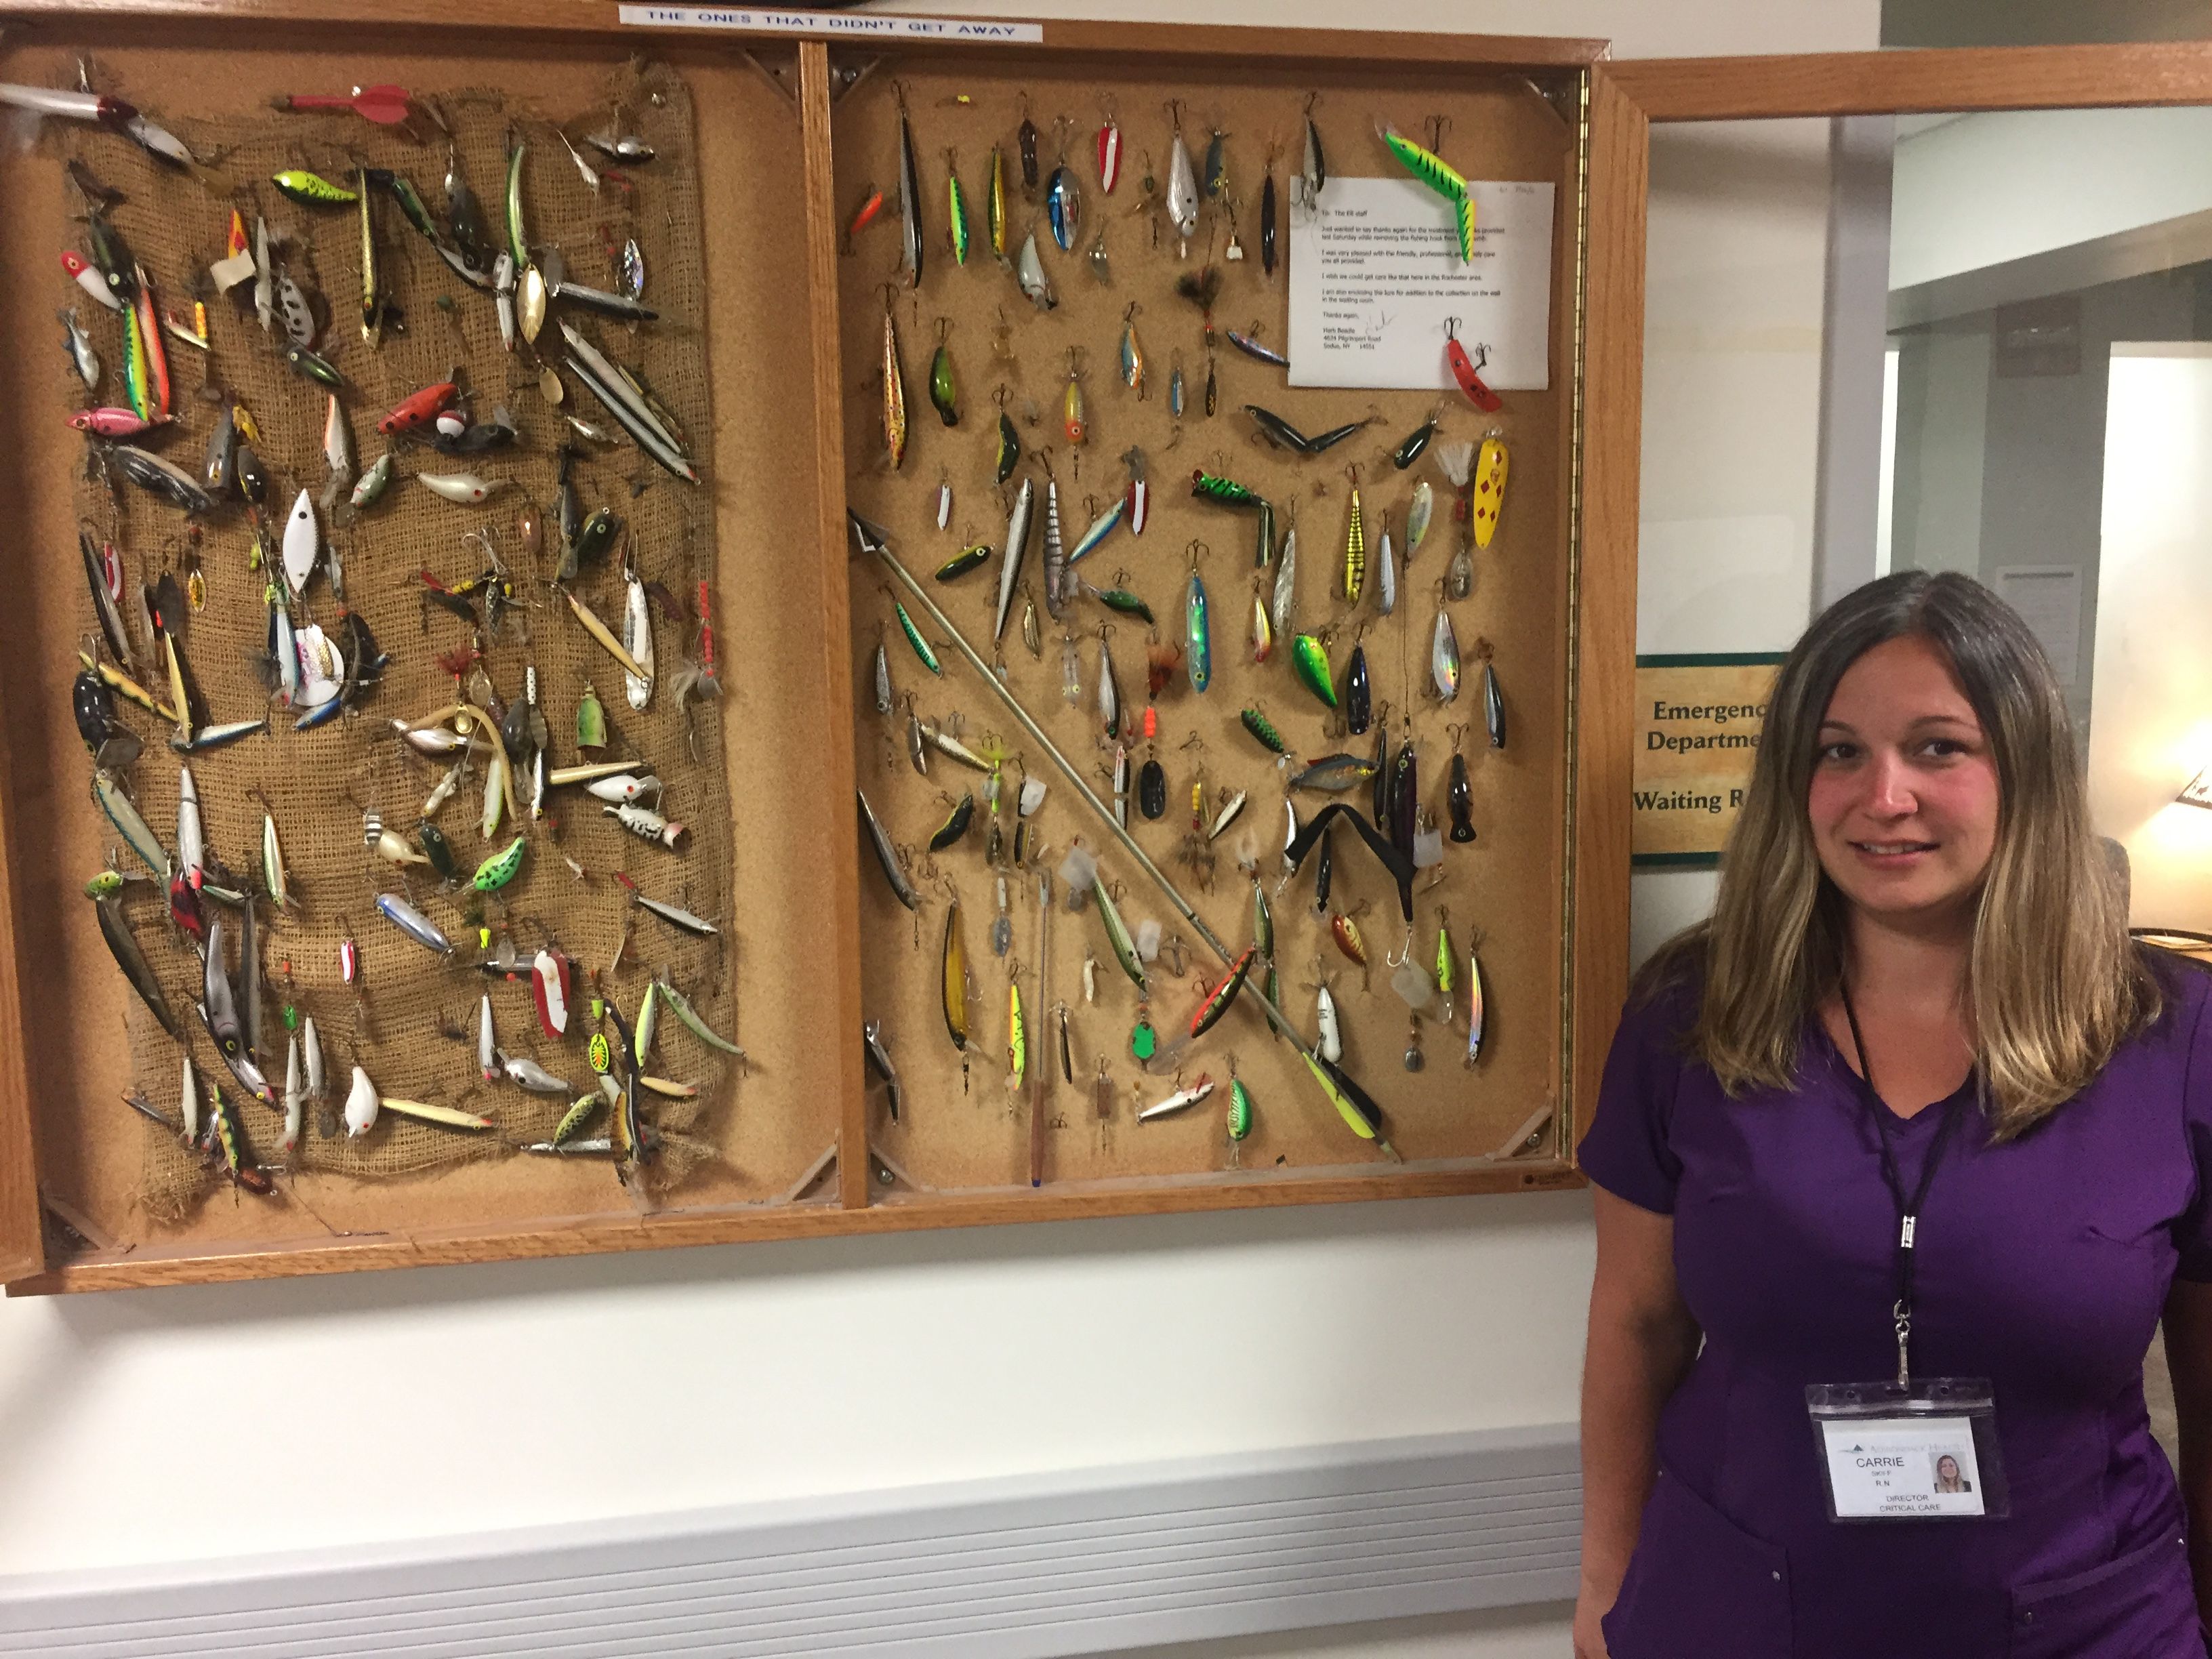 Painfully hooked: Adirondack hospital fishing lure display is no